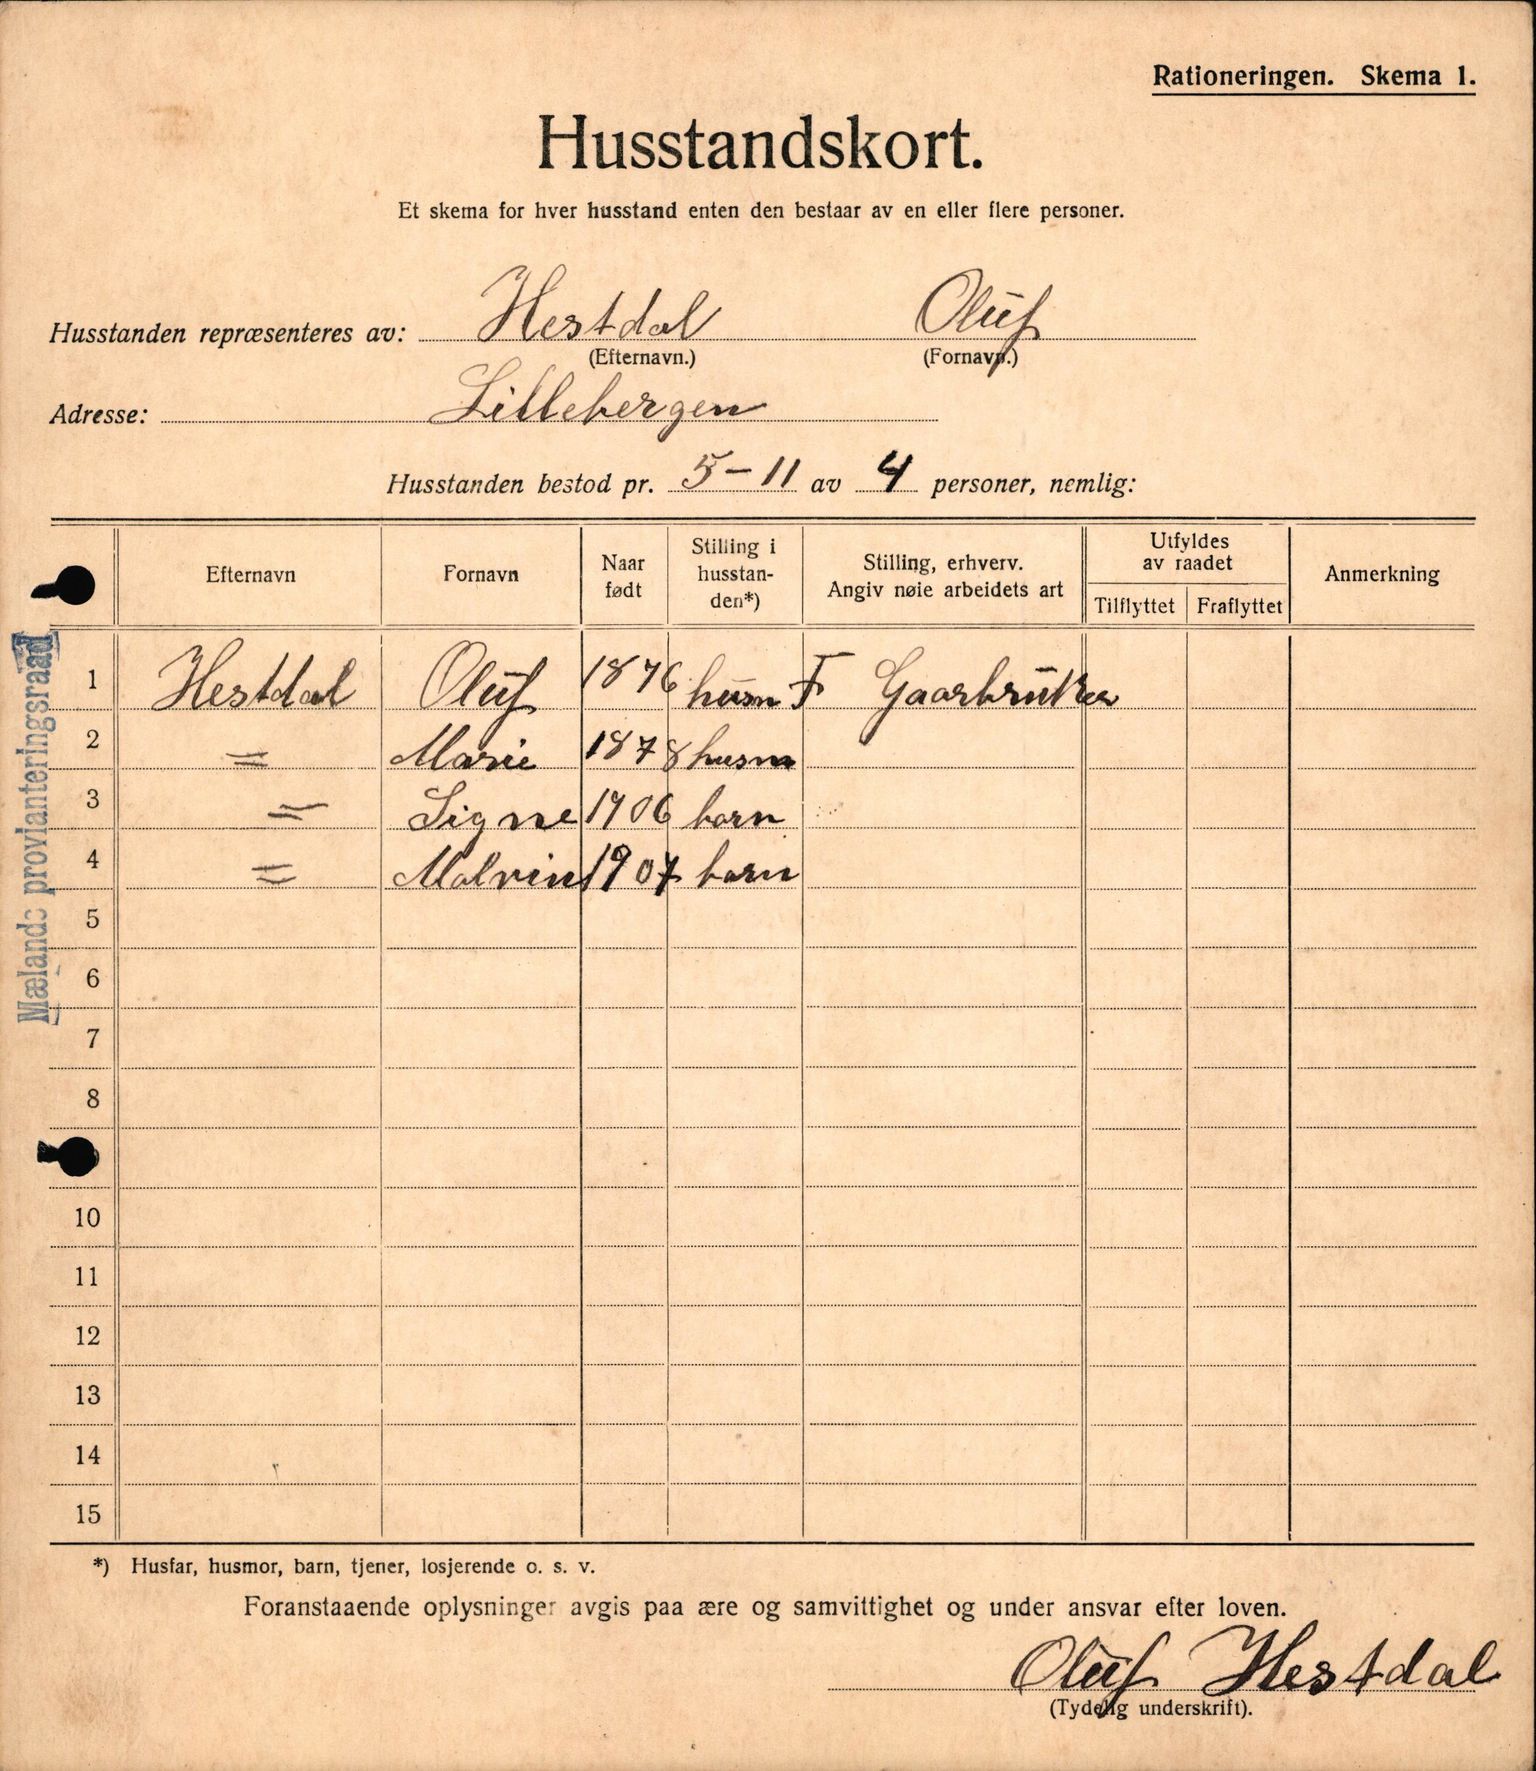 IKAH, Meland kommune, Provianteringsrådet, Husstander per 01.11.1917, 1917-1918, s. 271